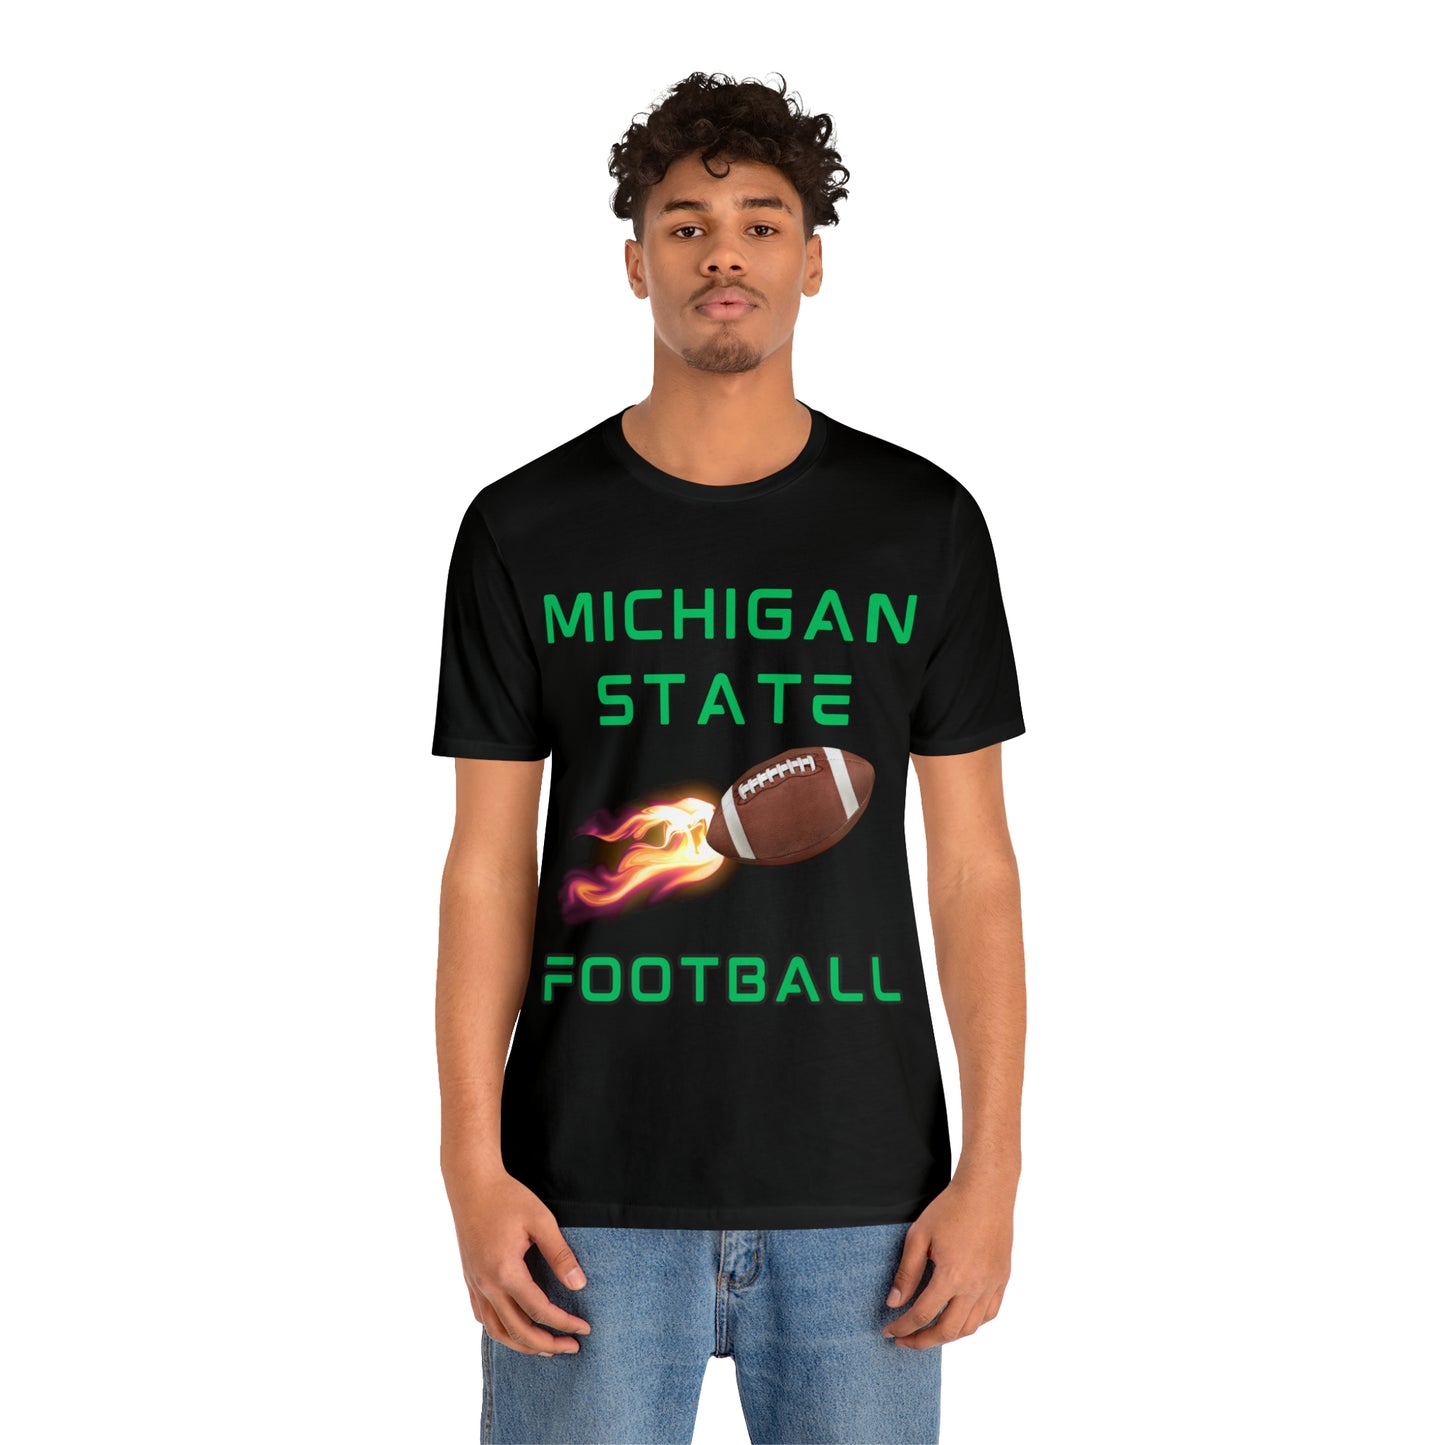 Michigan State Flame Football Customizable Unisex Jersey Short Sleeve Tee